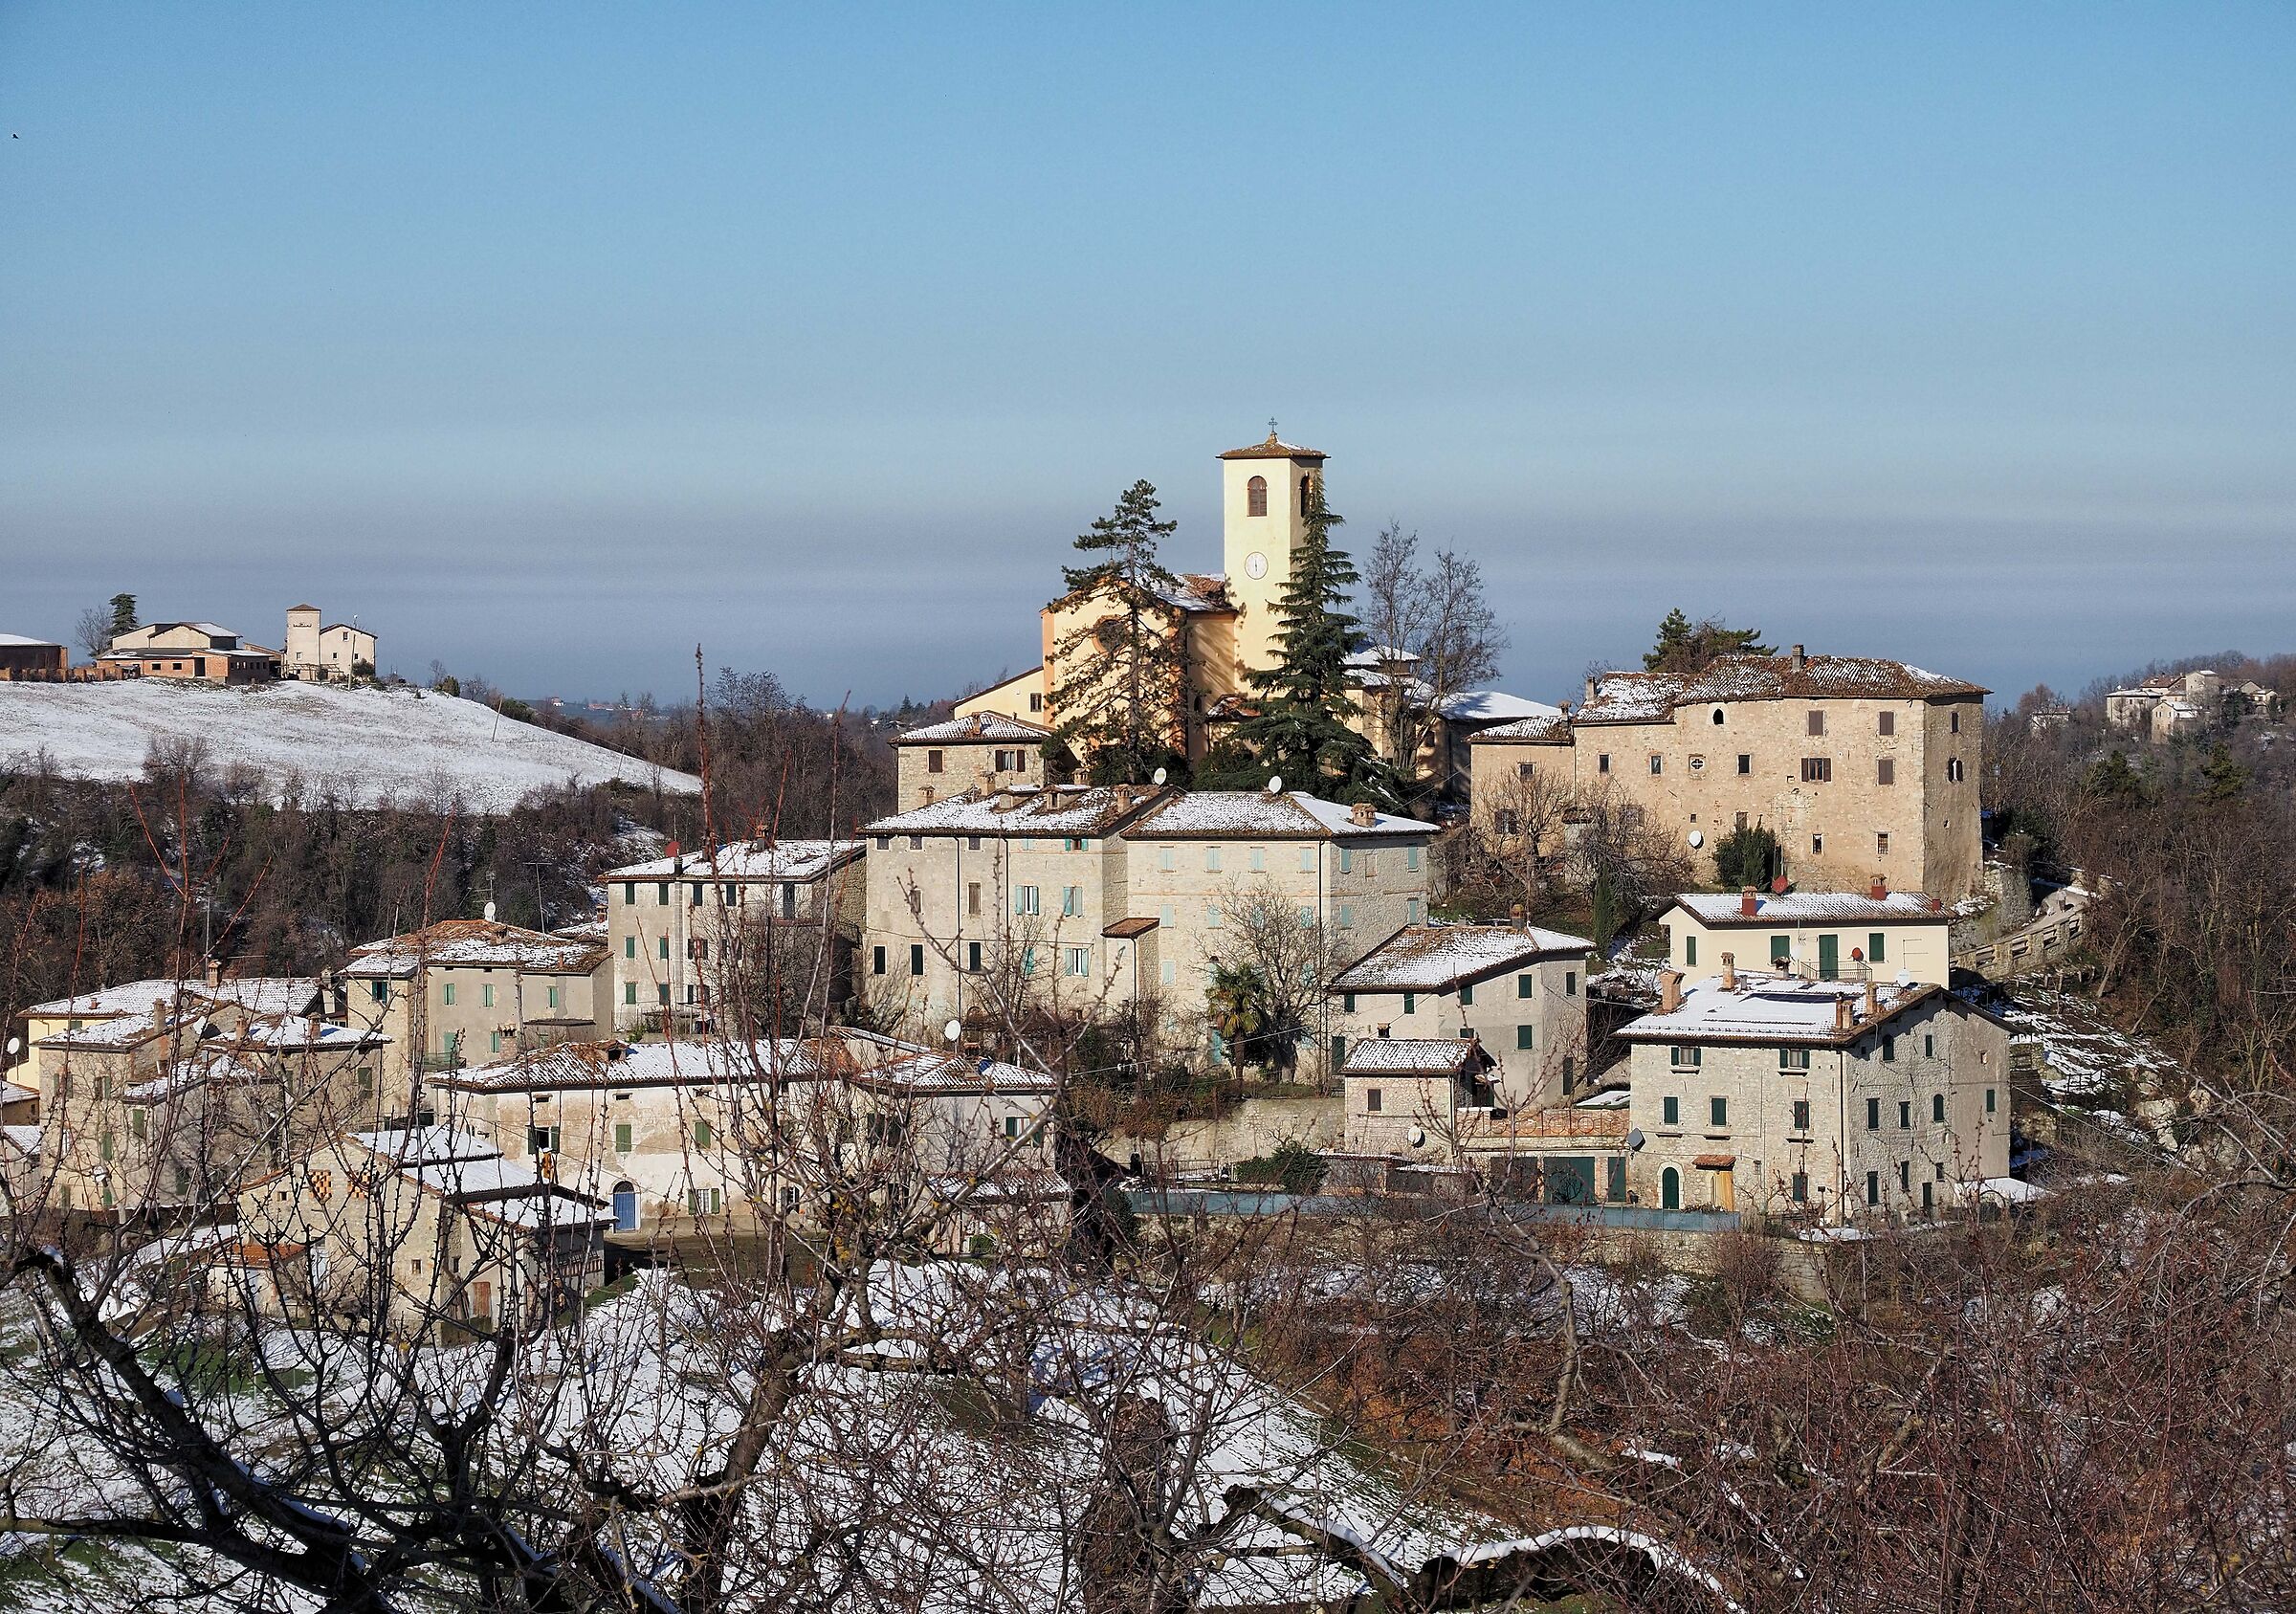 Village of Montecorone...